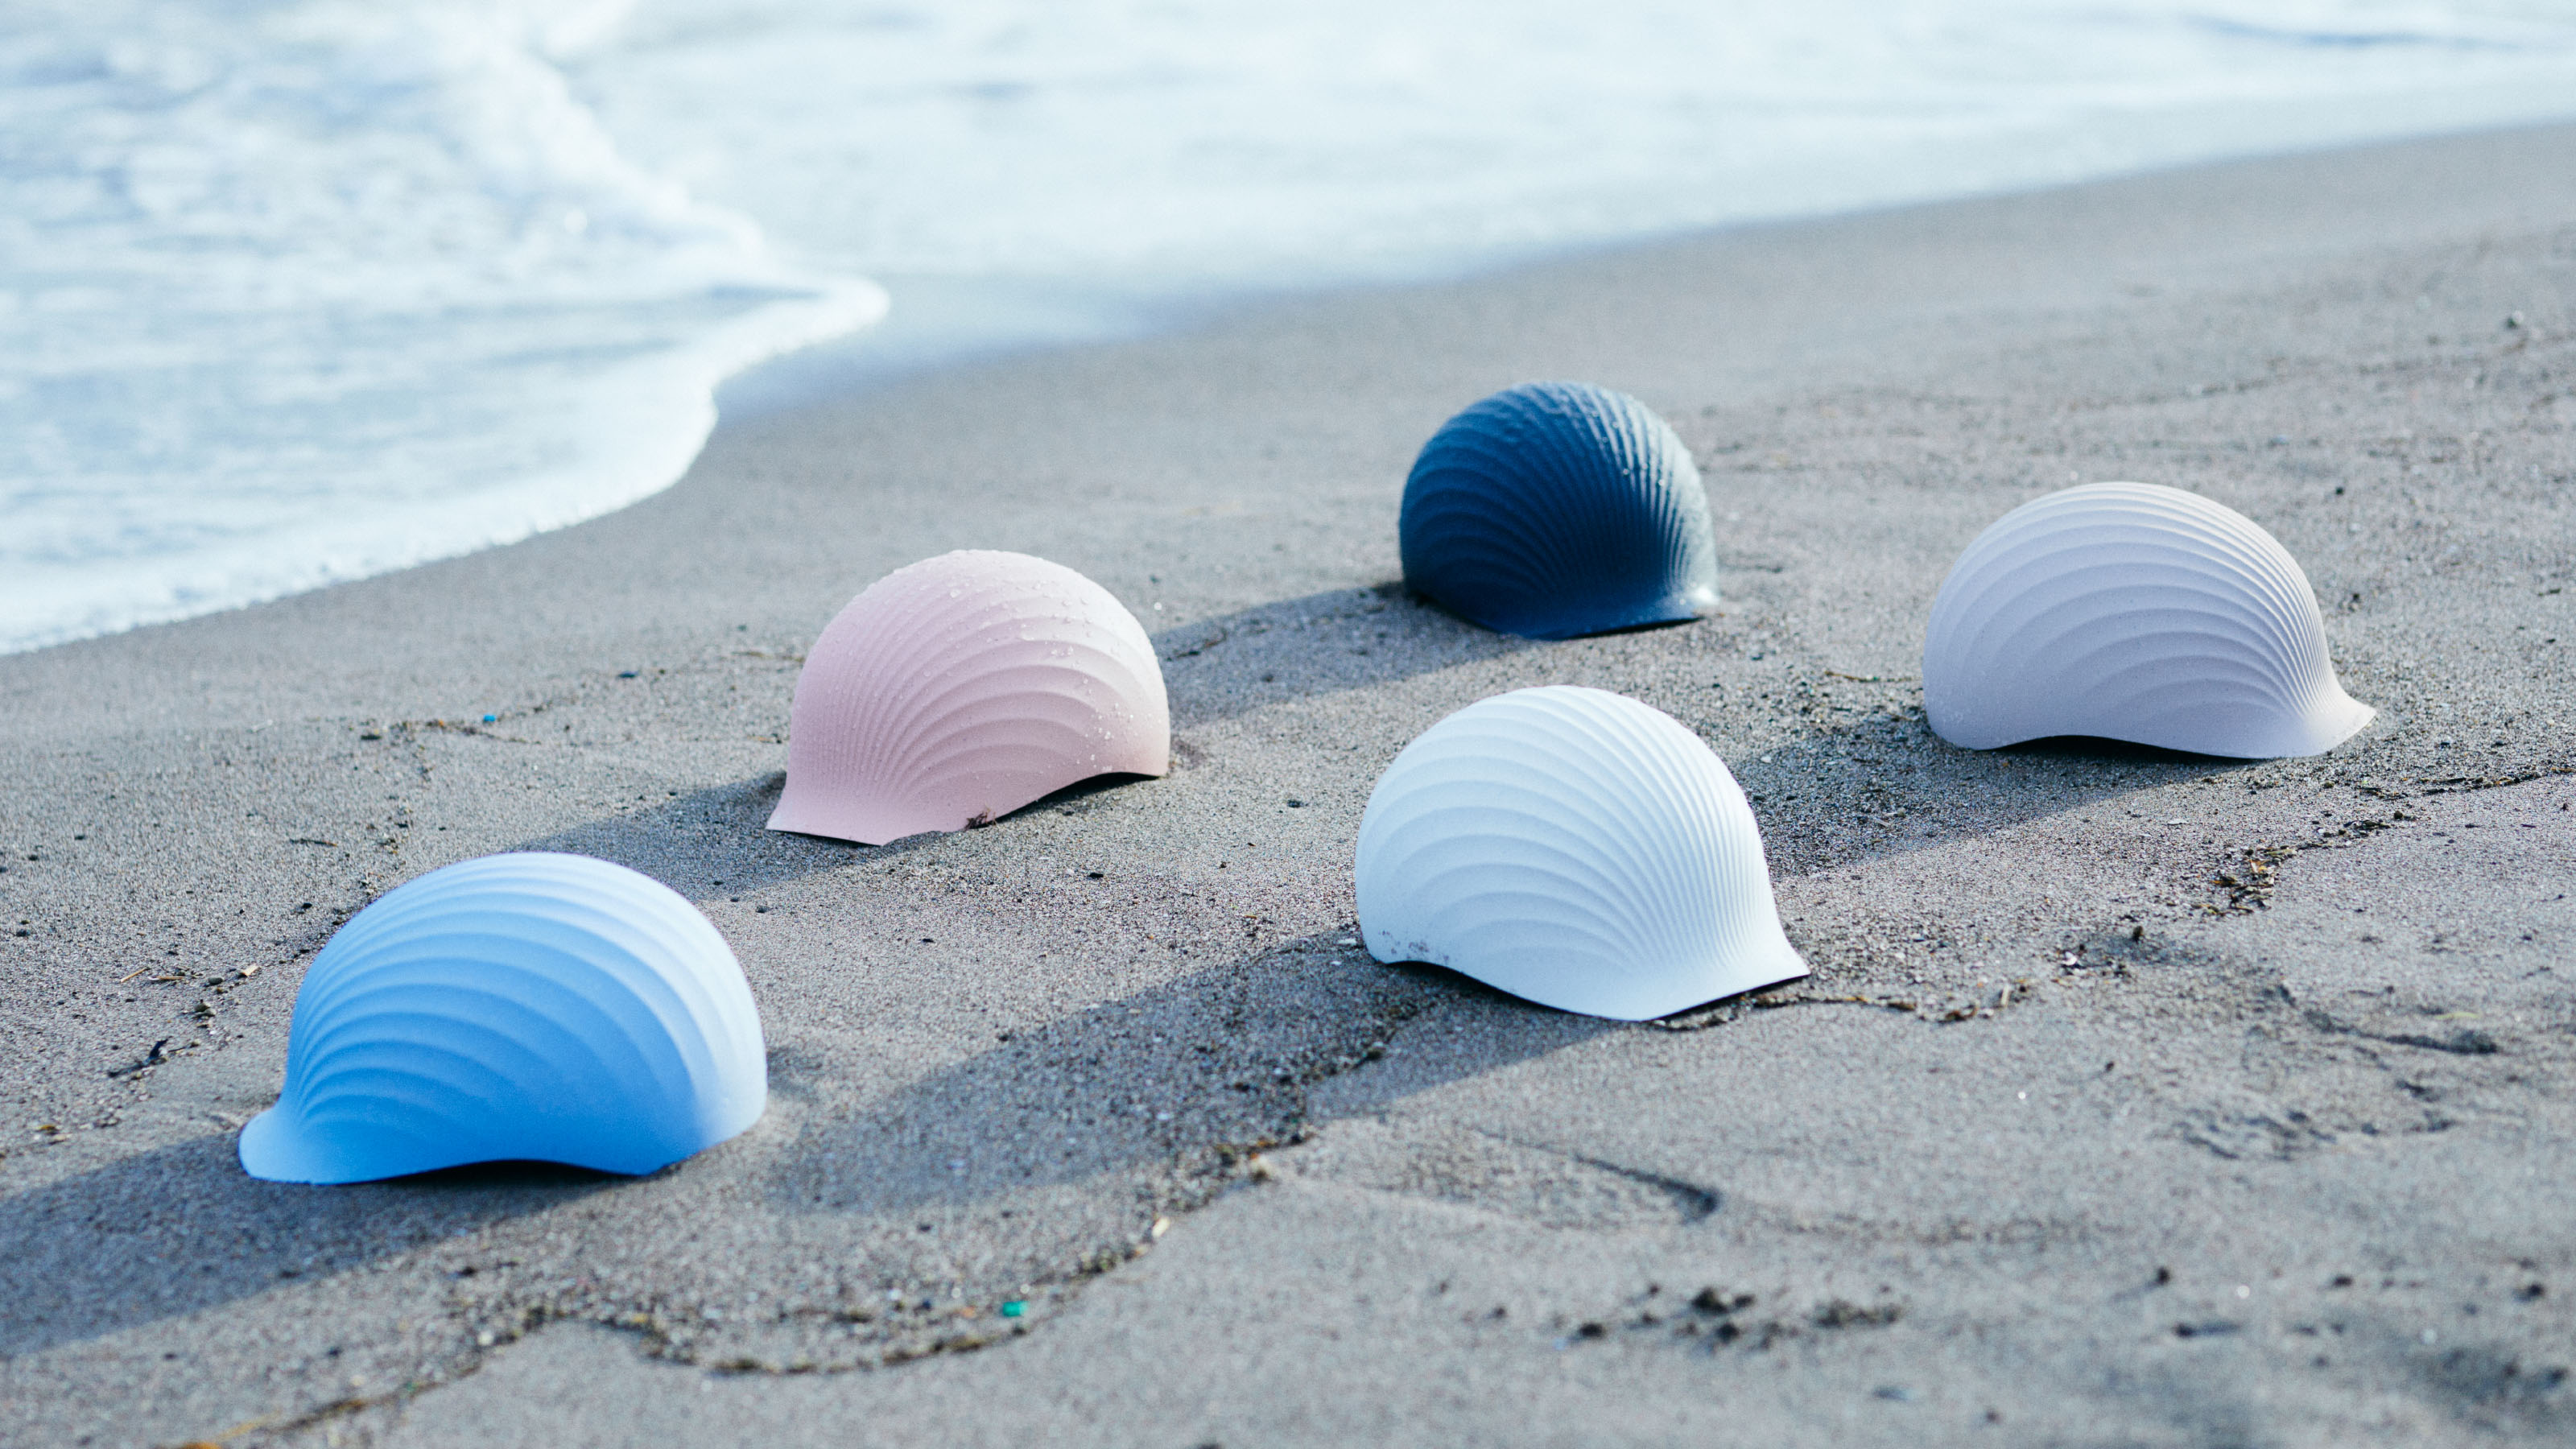 Shellmet helmets on a beach